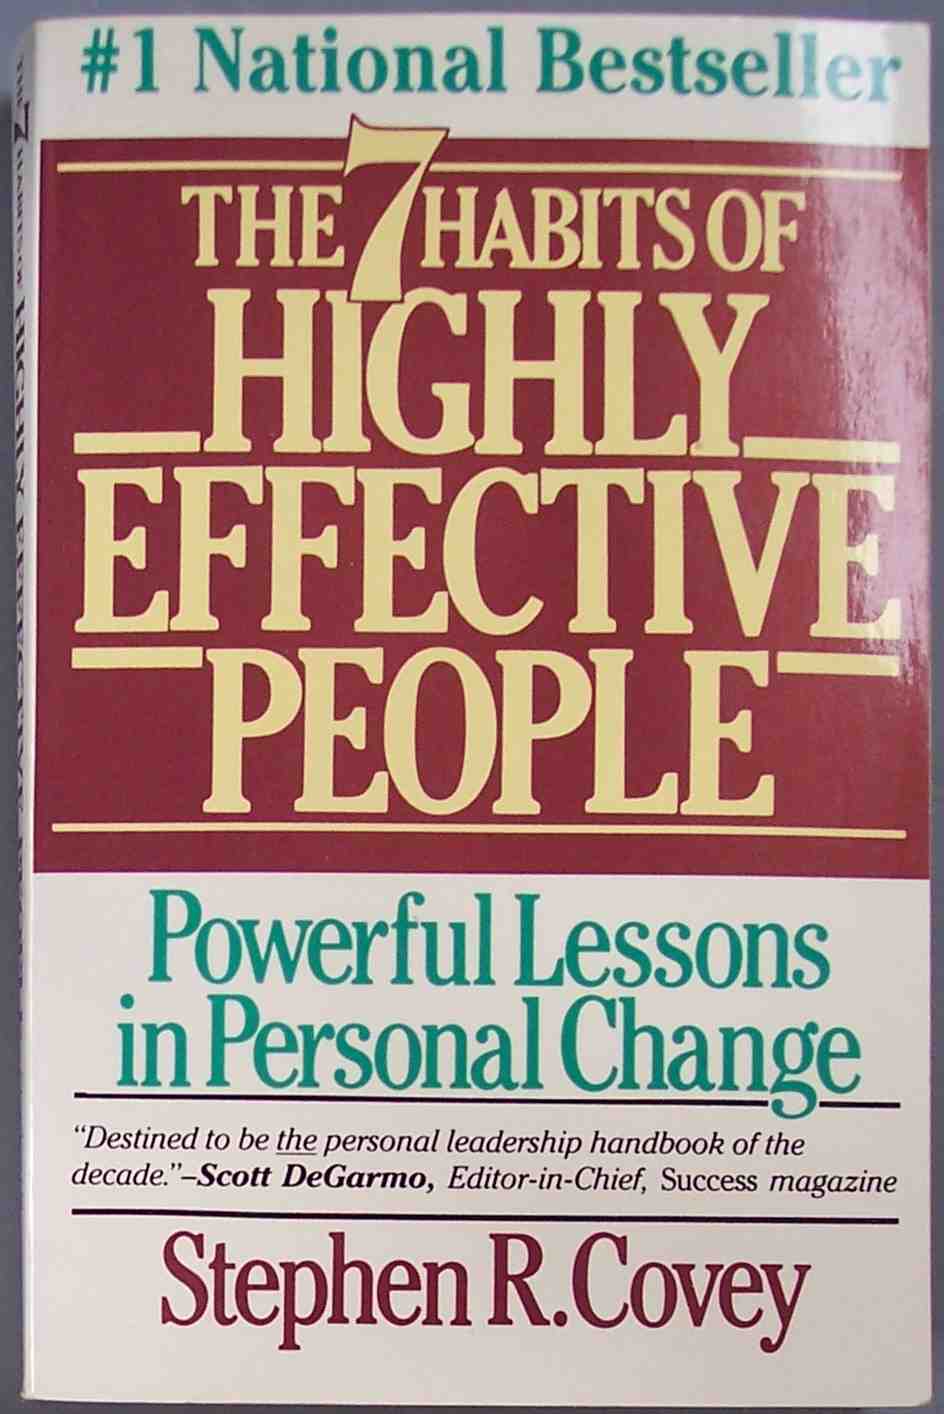 seven habits of highly effective people amazon